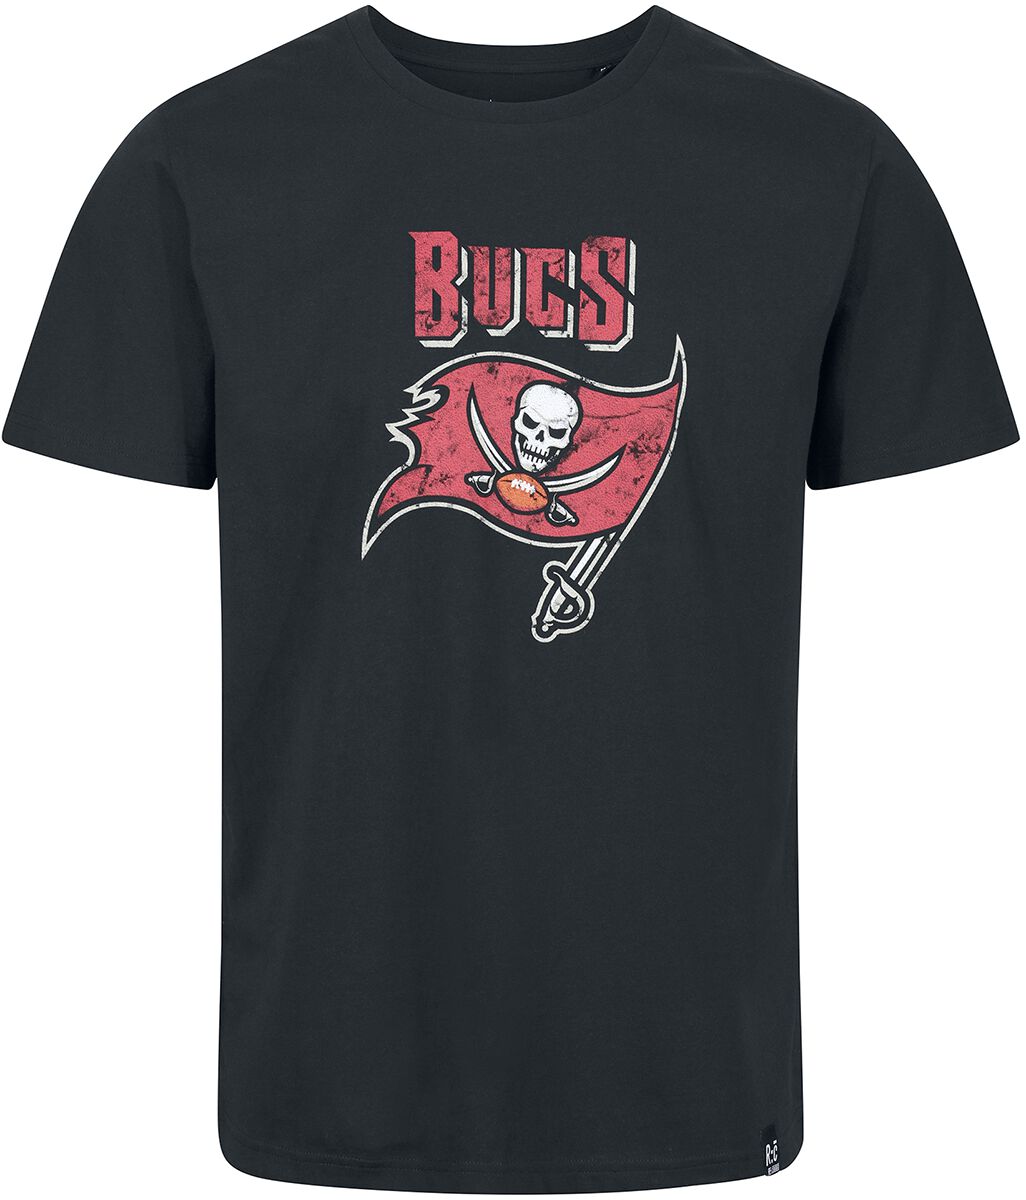 NFL NFL BUCCS LOGO T-Shirt schwarz in XL